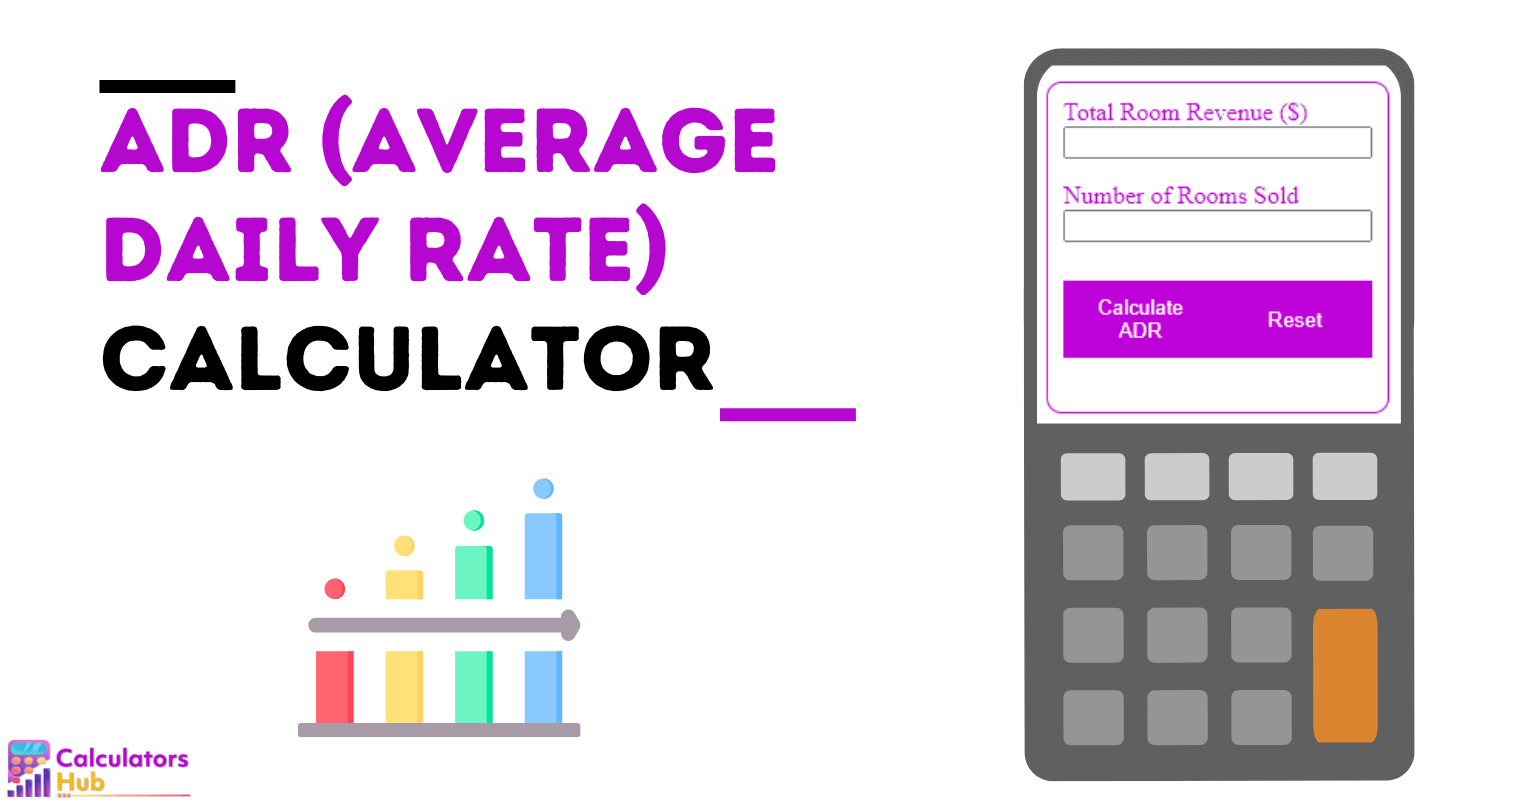 ADR (Average Daily Rate) Calculator